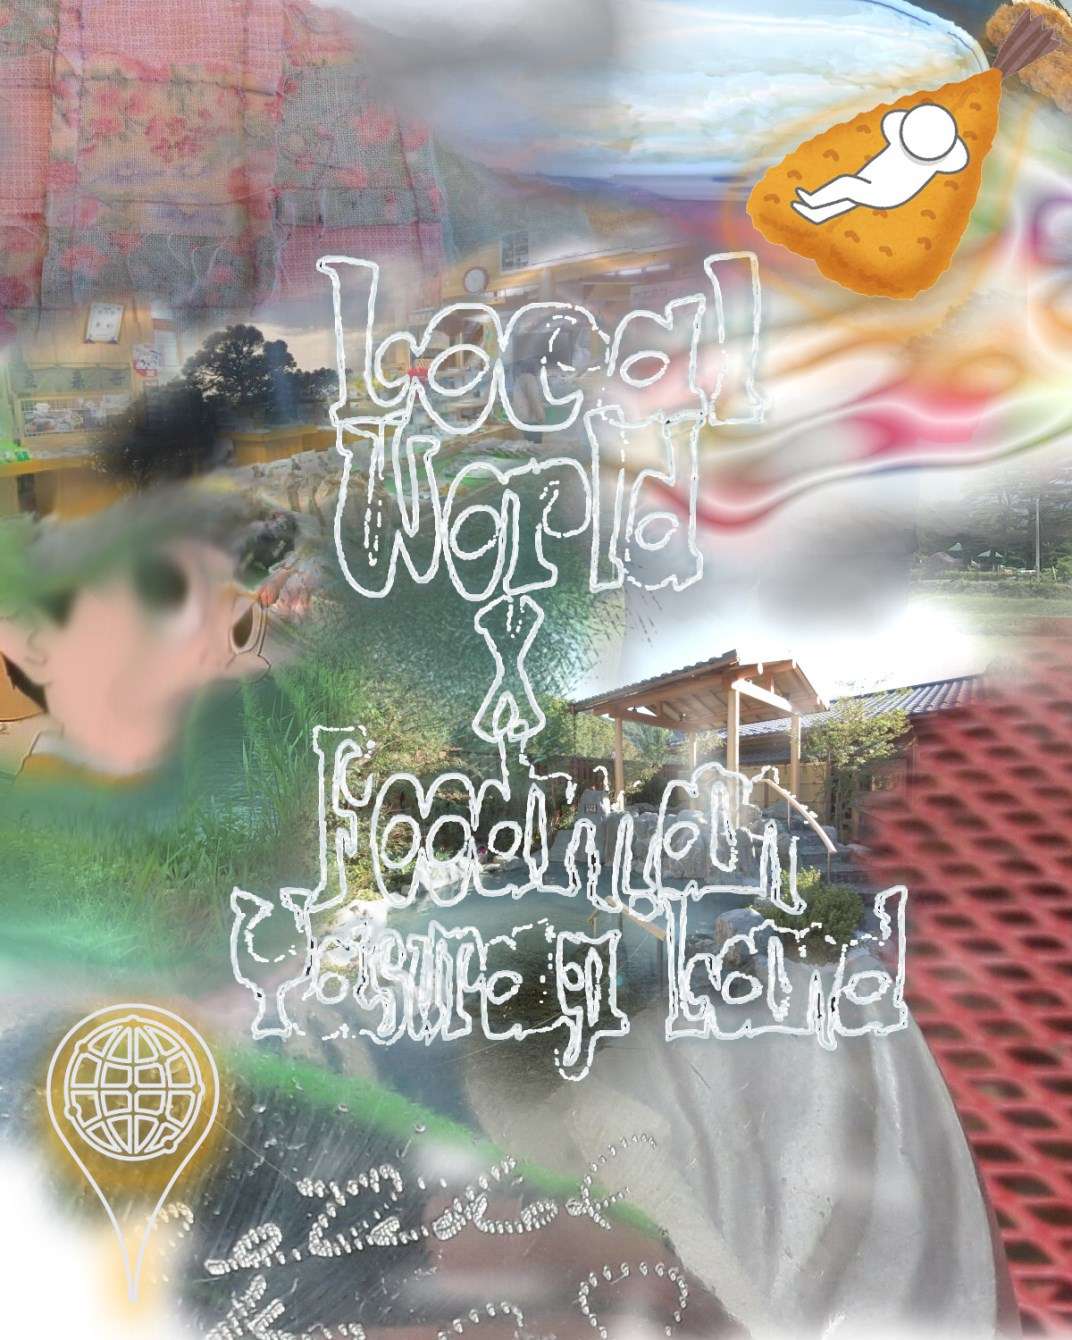 [POSTPONED] Local World x Foodman - Yasuragi Land - Day Concert - Flyer front